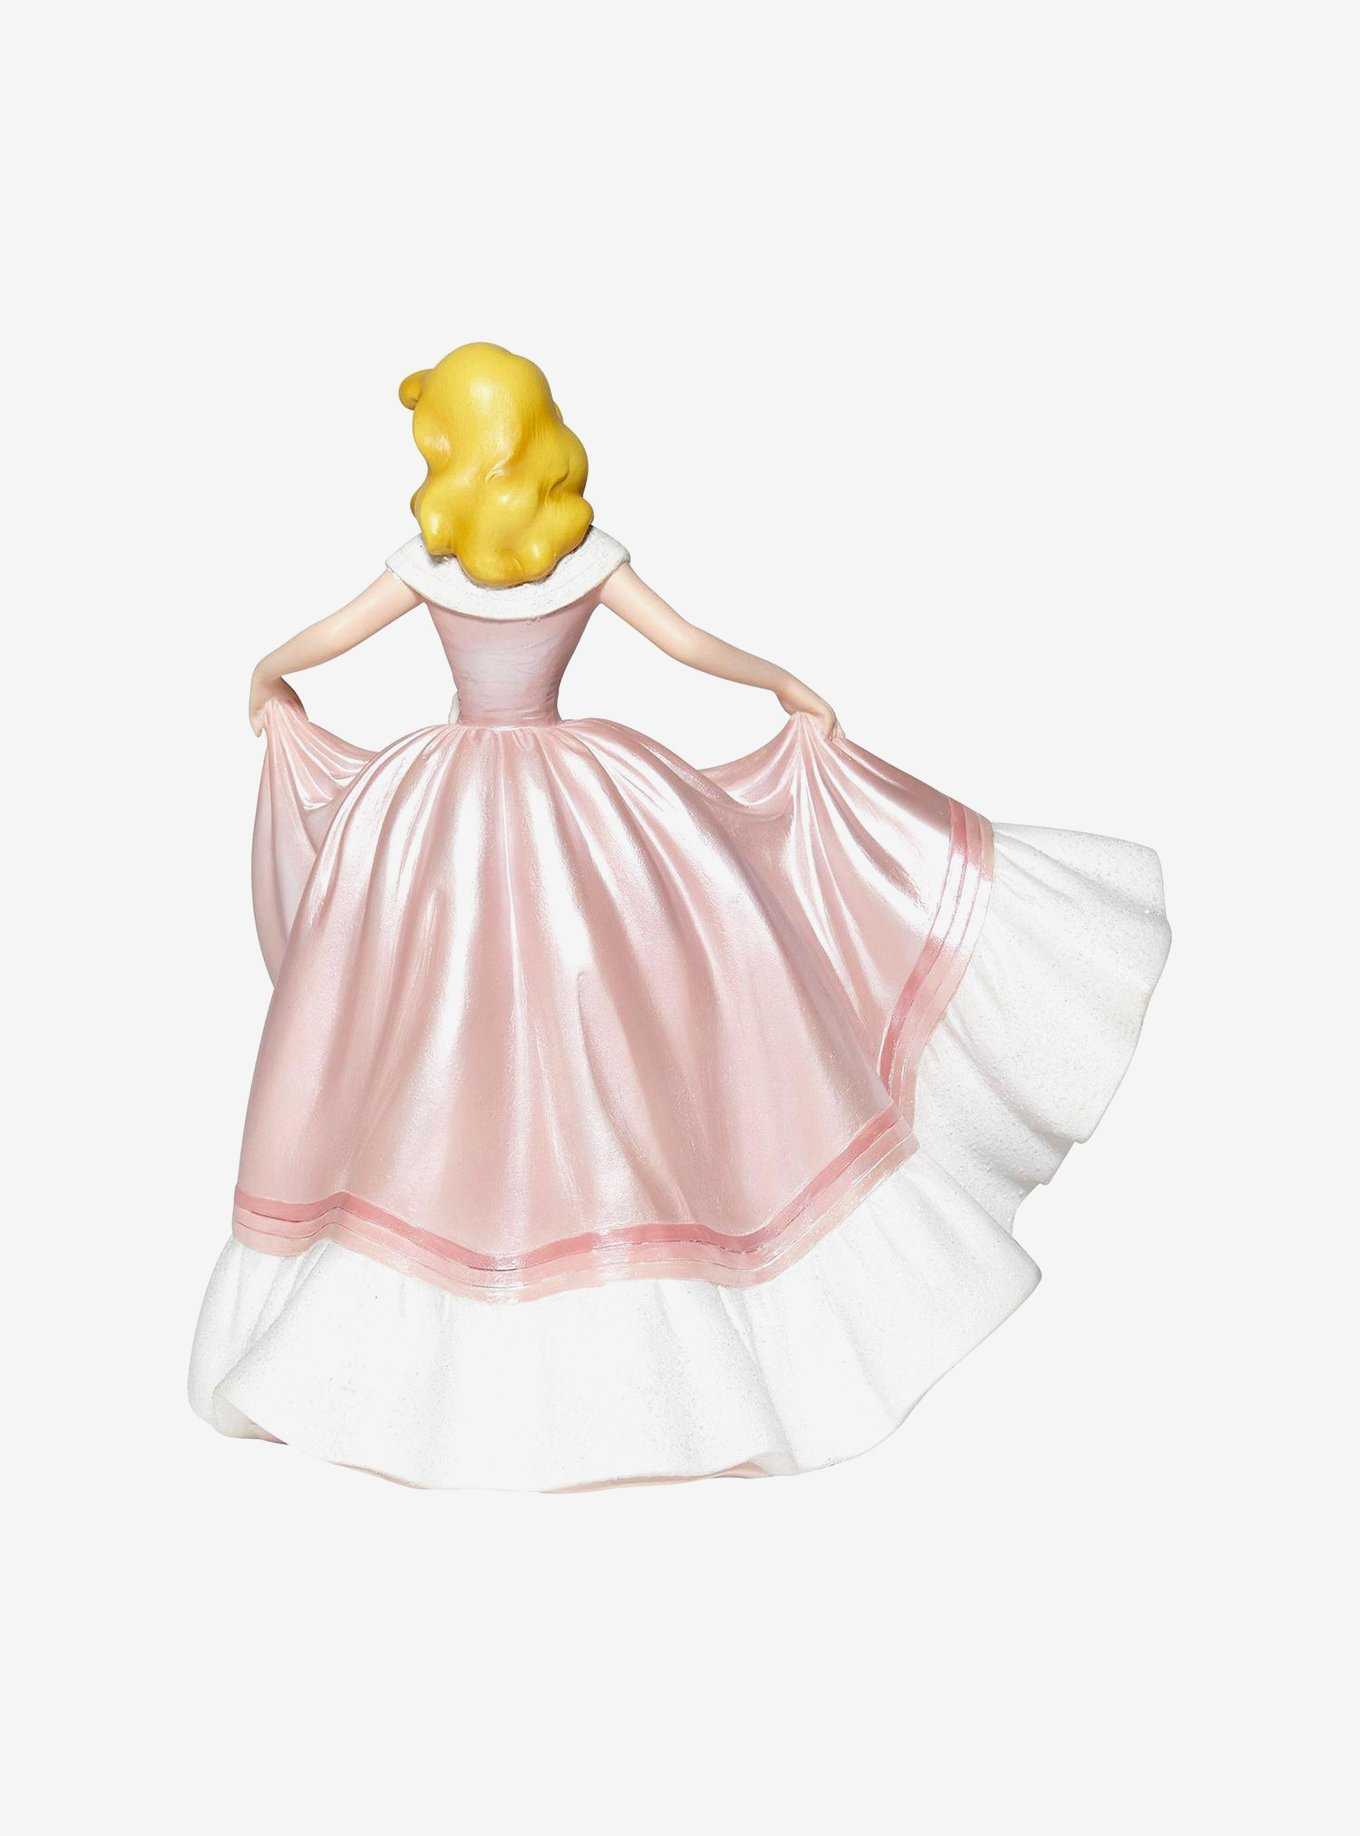 Disney Cinderella in Pink Dress Figure, , hi-res